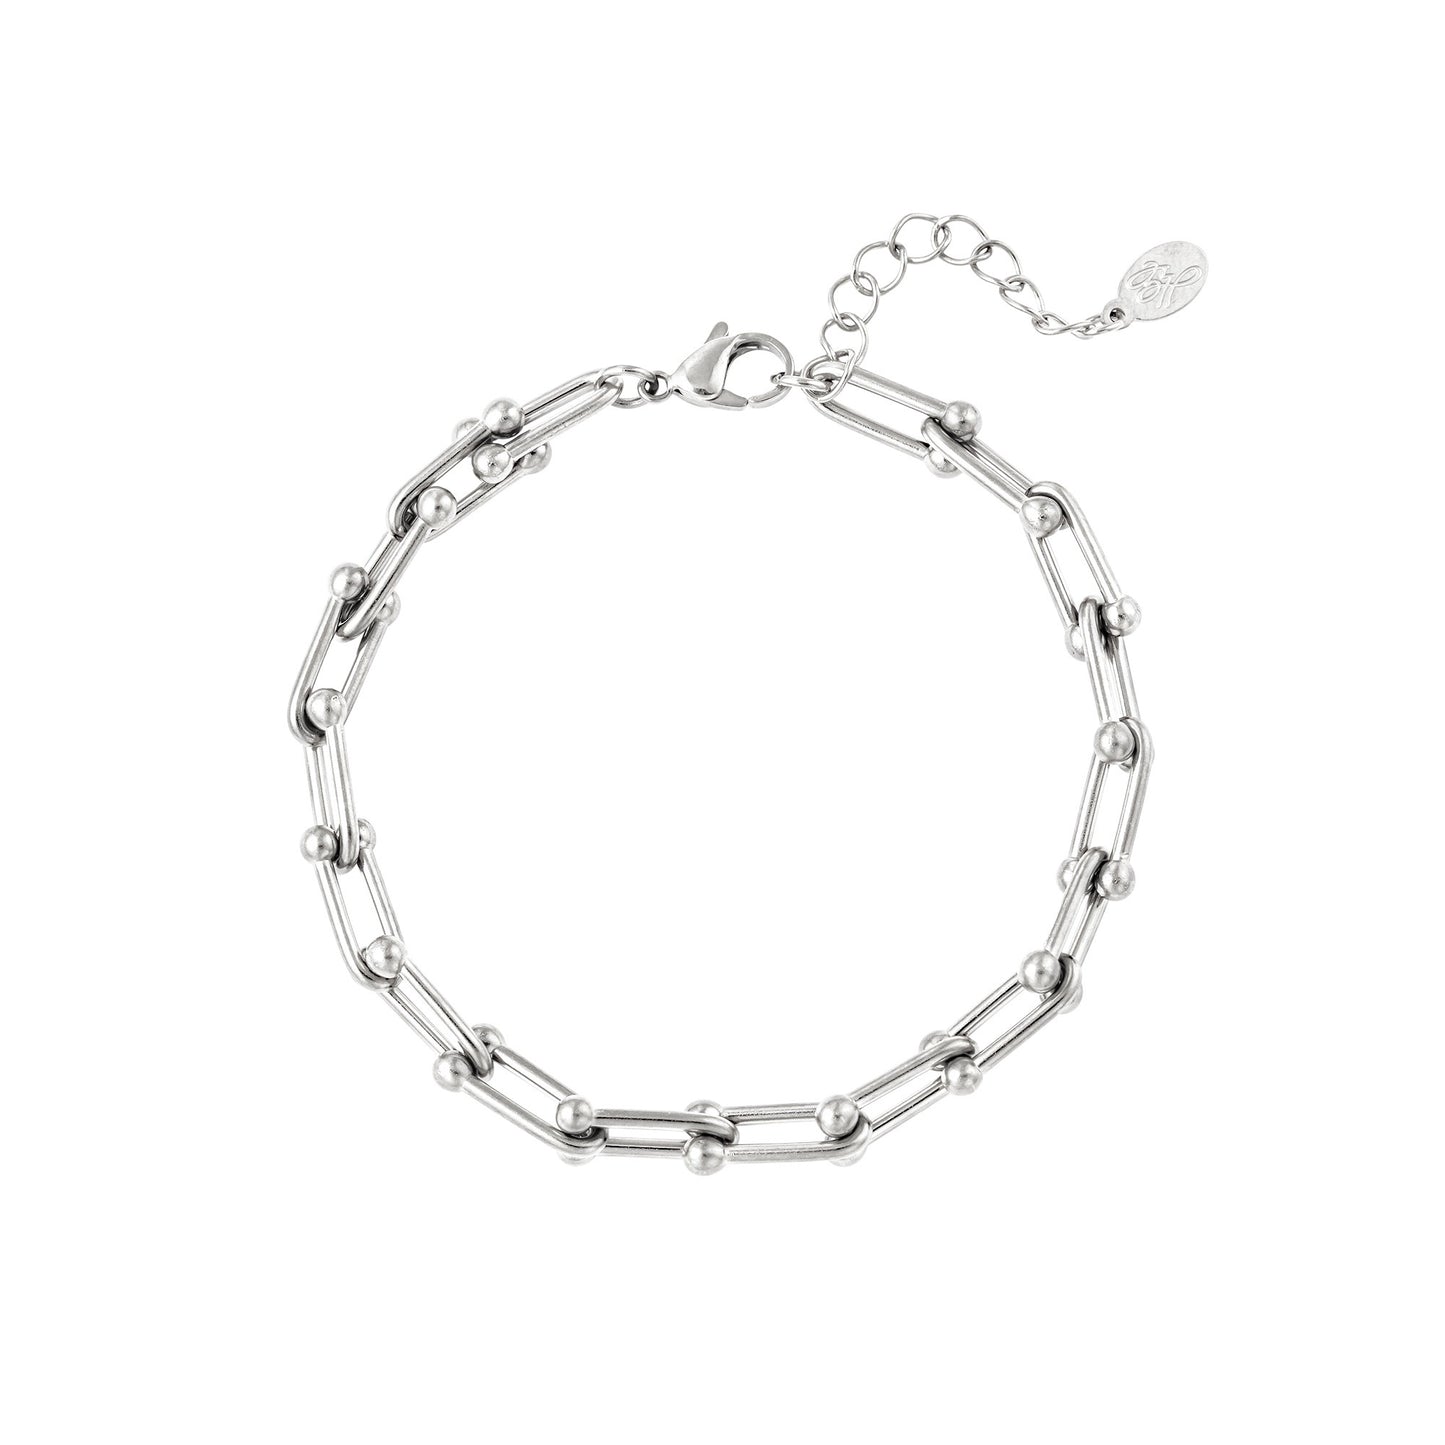 Linked Chain Bracelet Silver